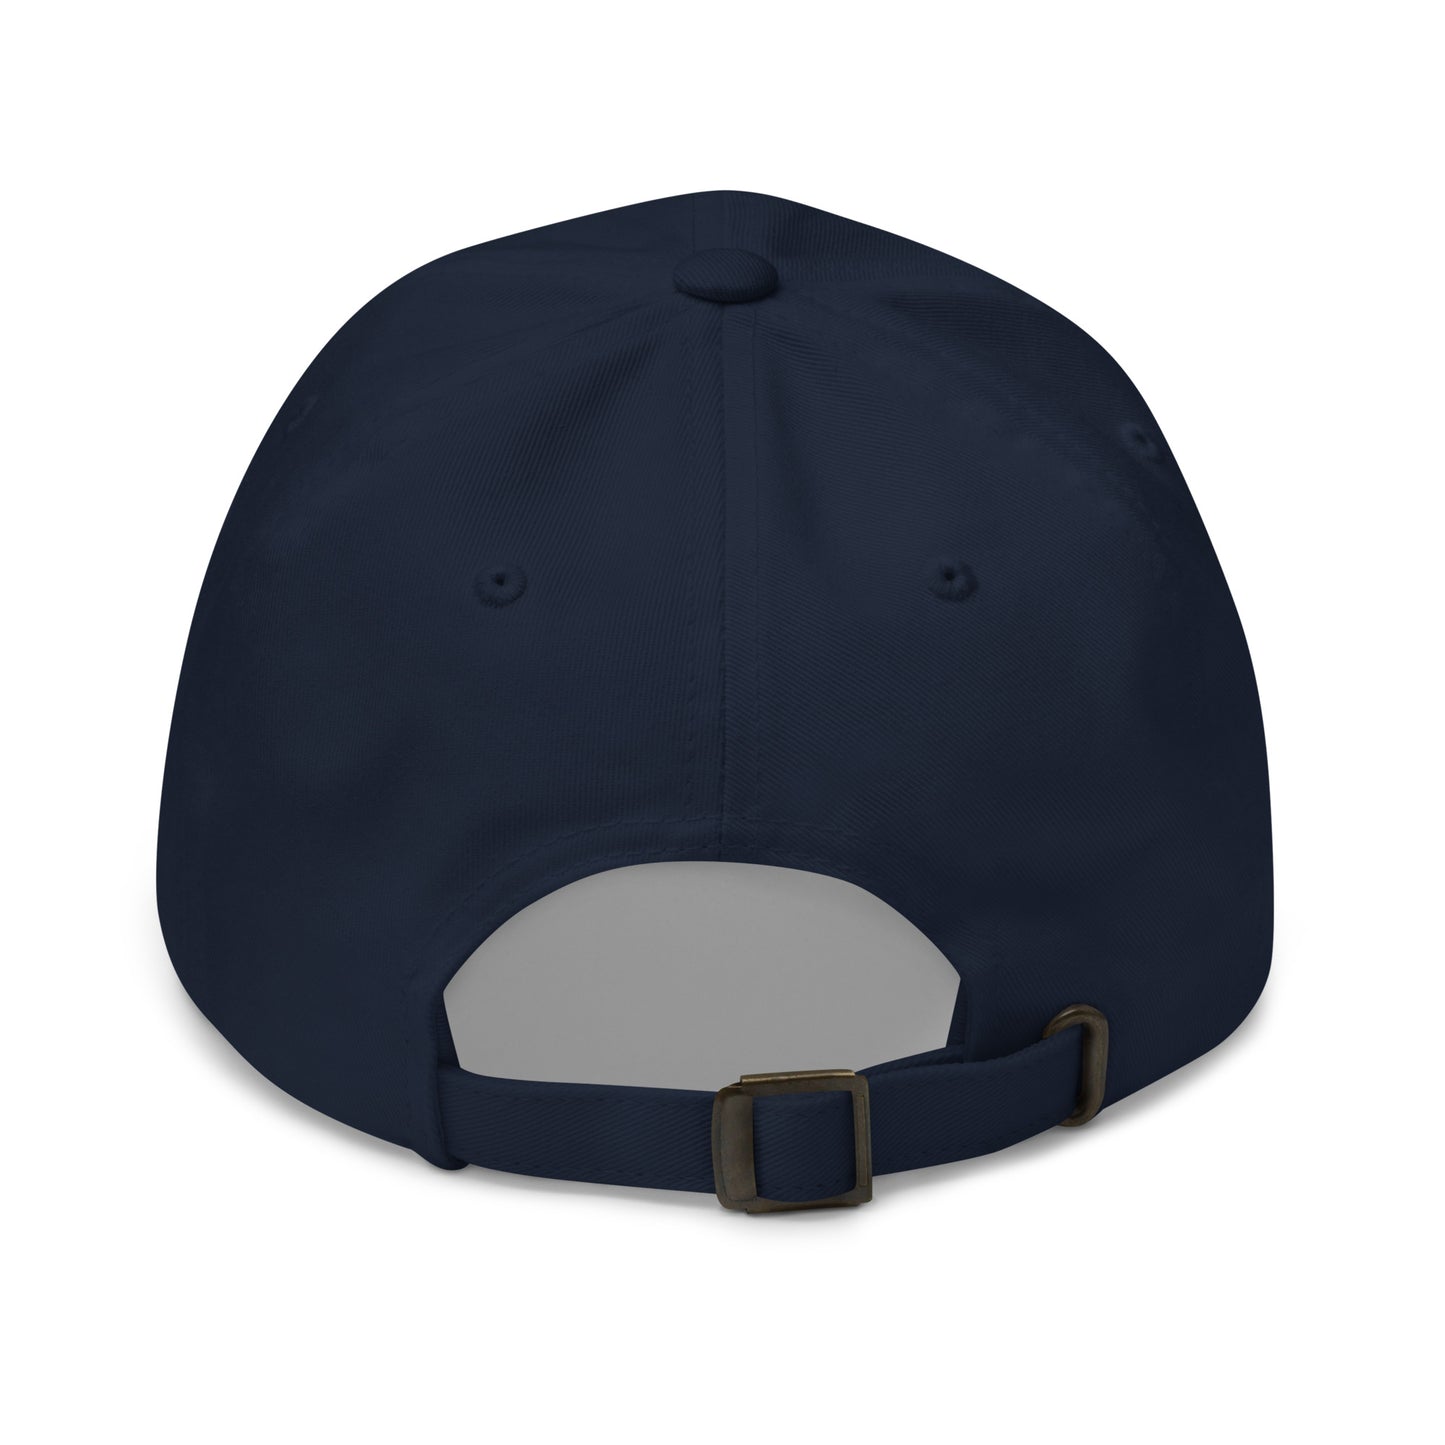 Golf Varsity Embroidered hat